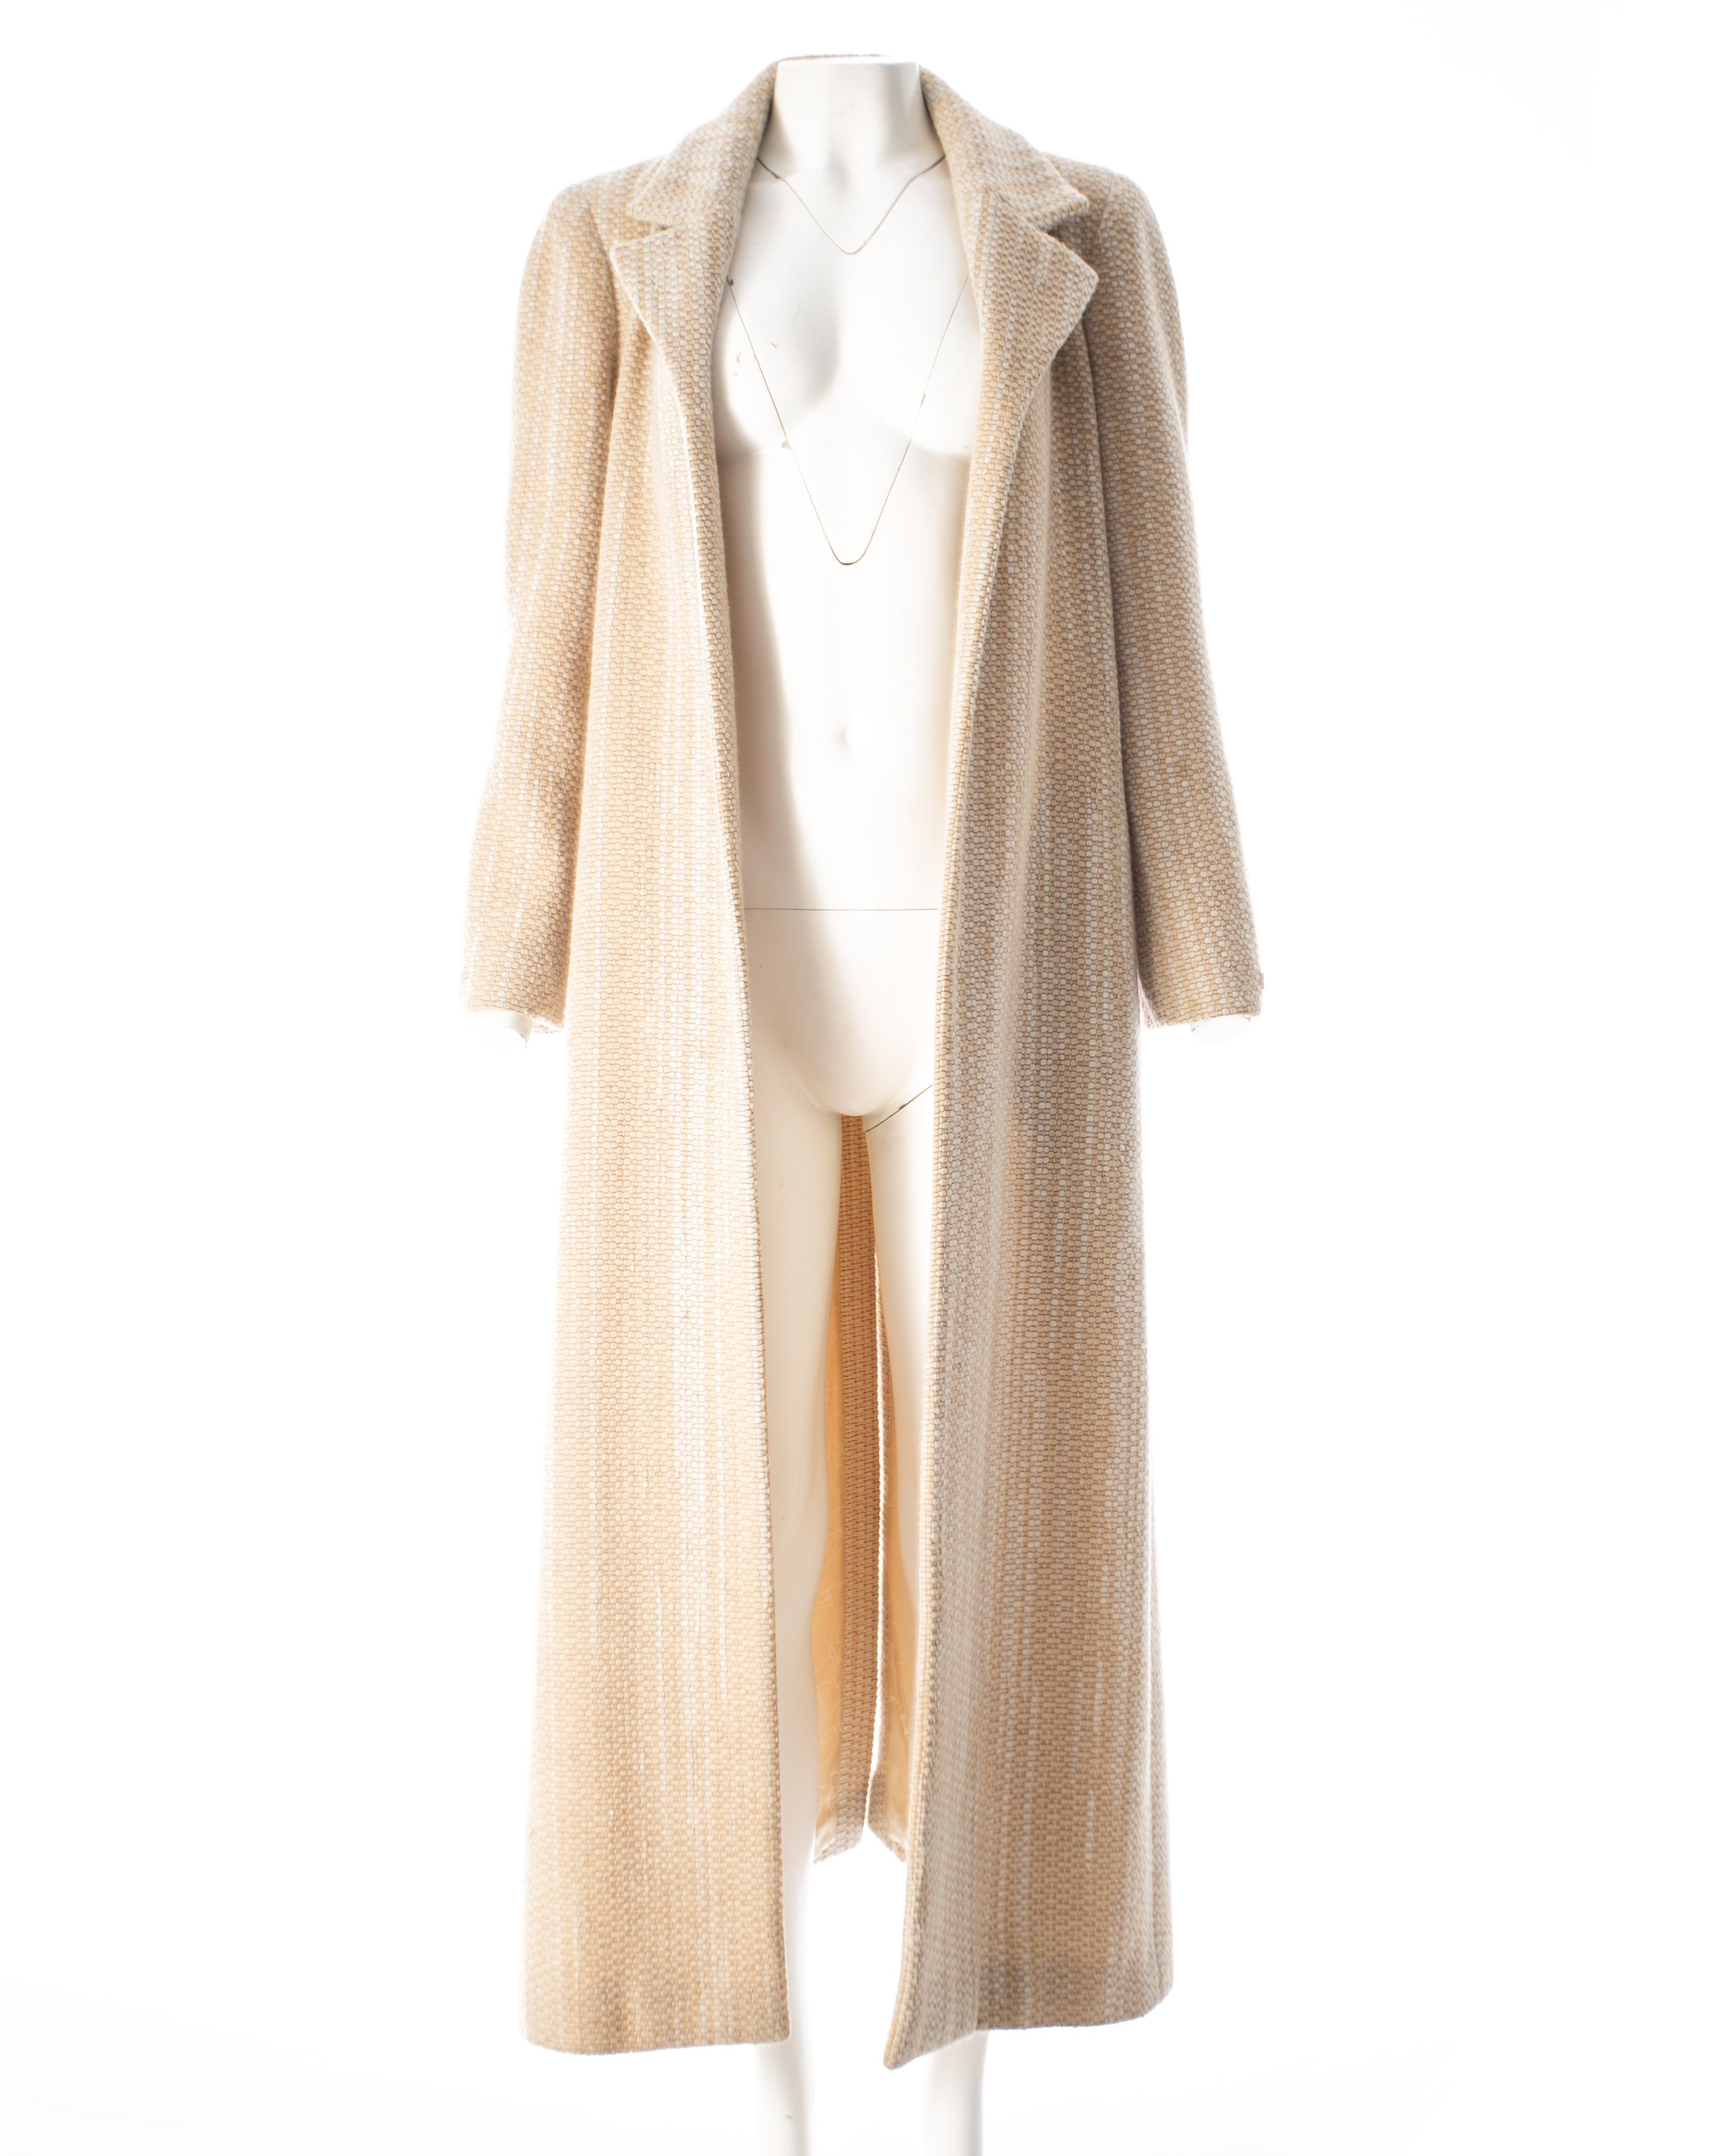 Beige Chanel cream tweed maxi coat, A / W 2001